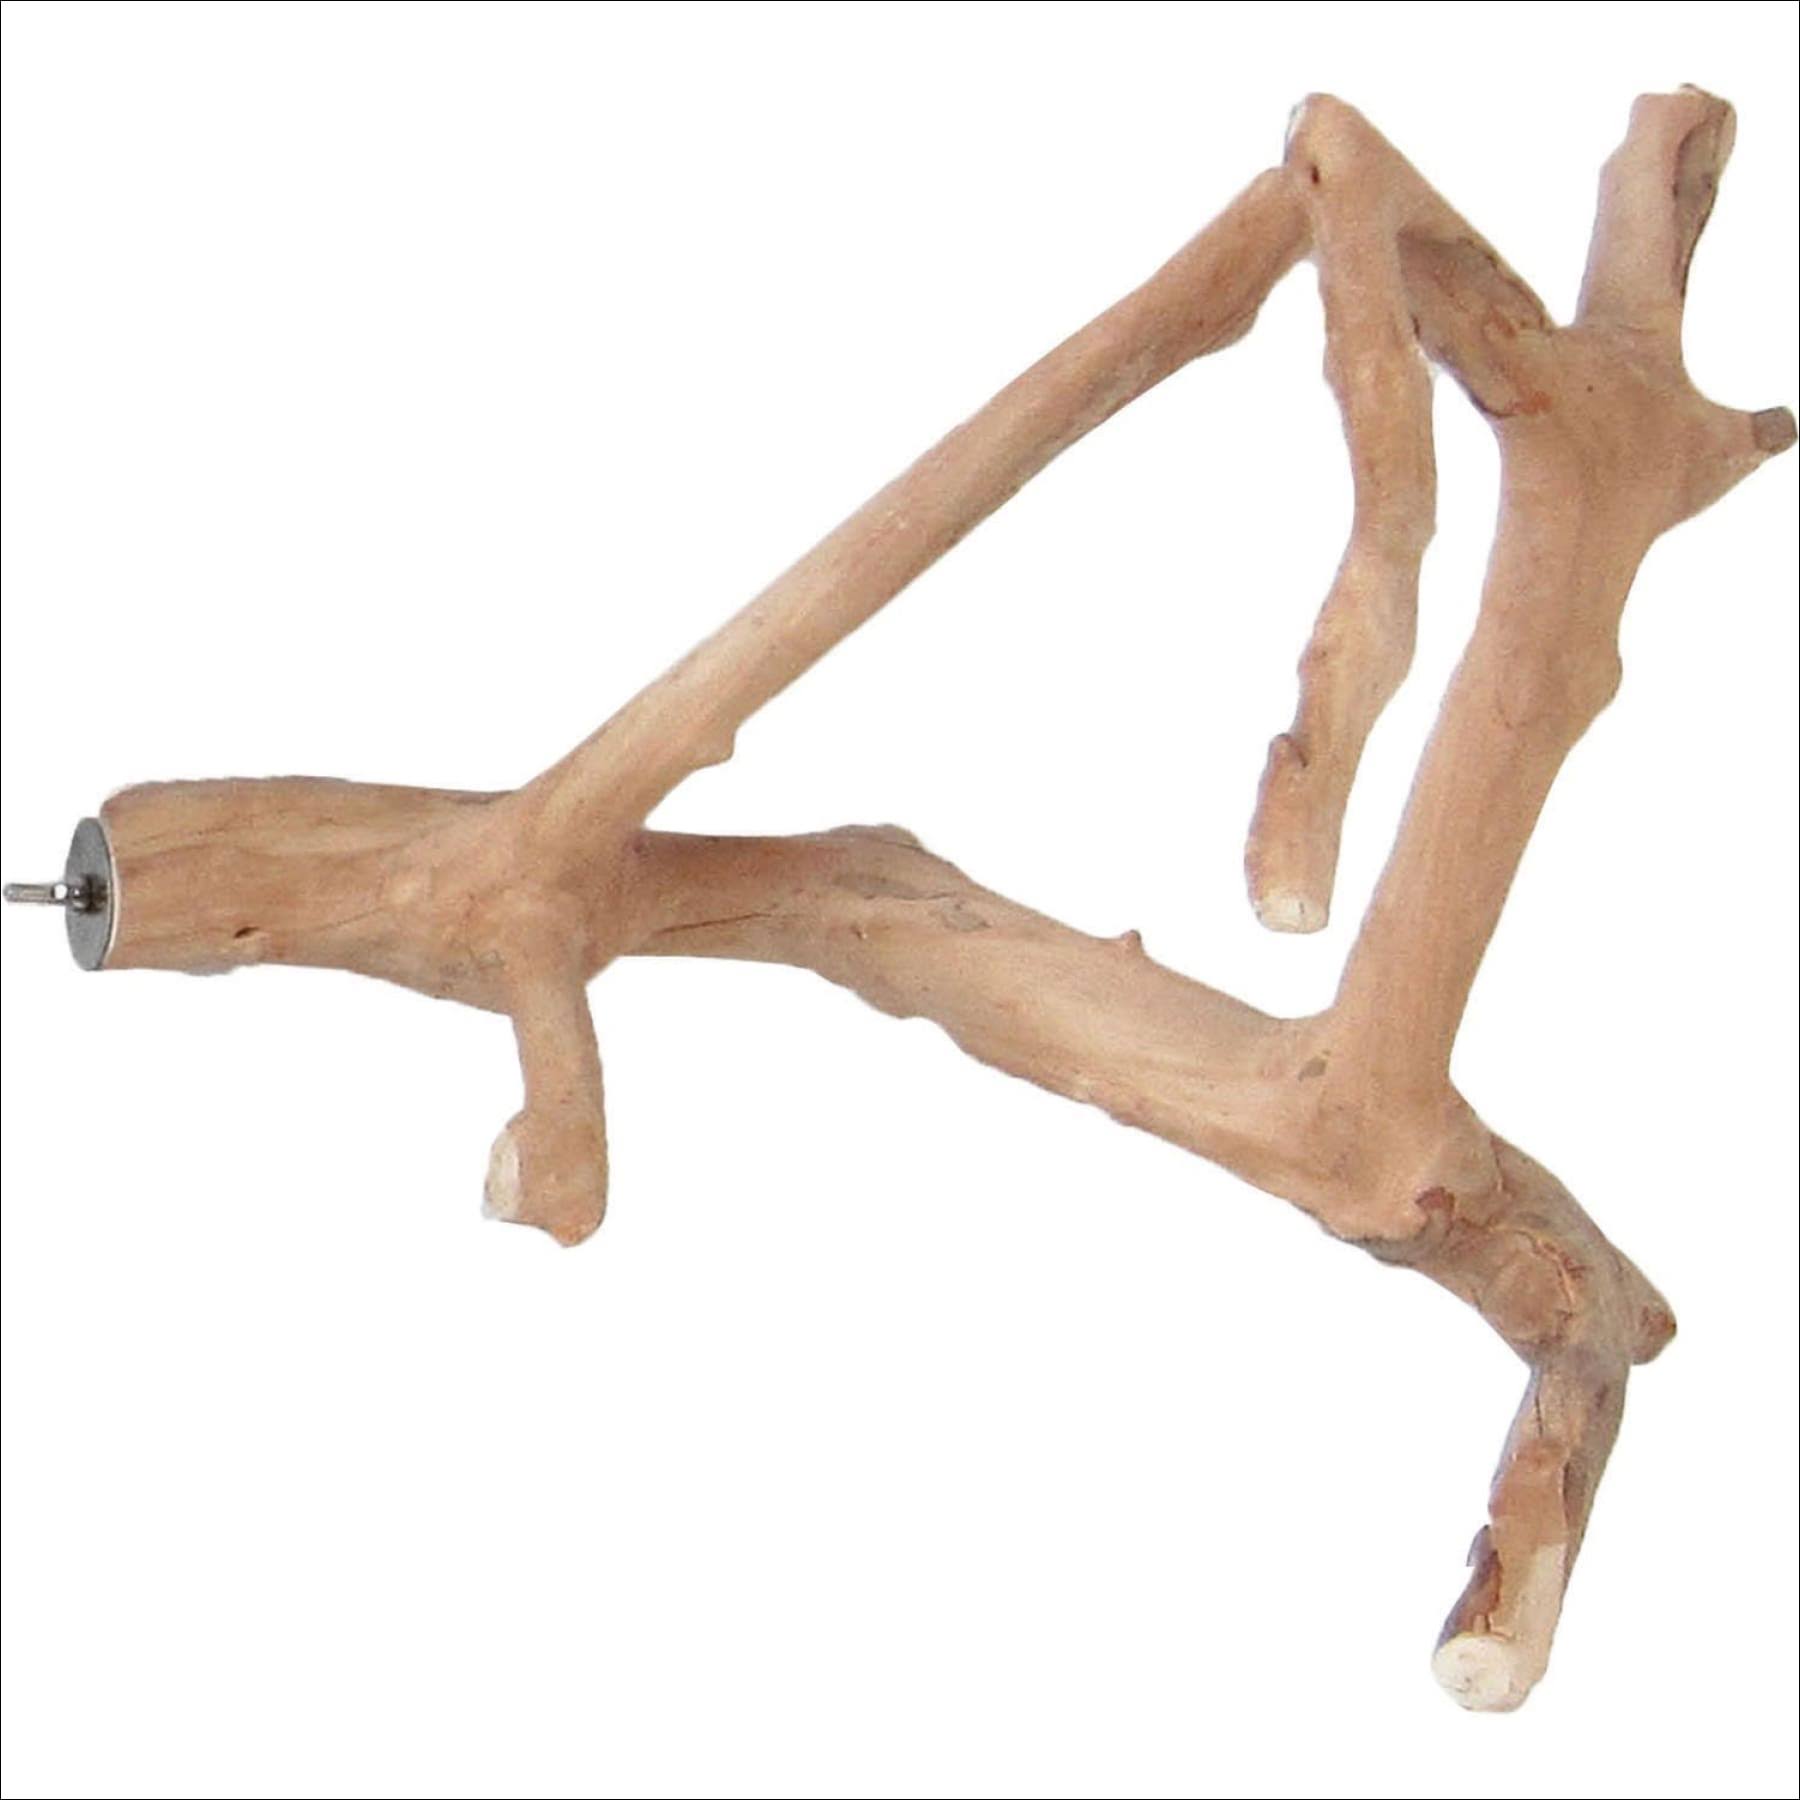 Java Wood Multi Branch Perch - Small, 16in x 1.2in